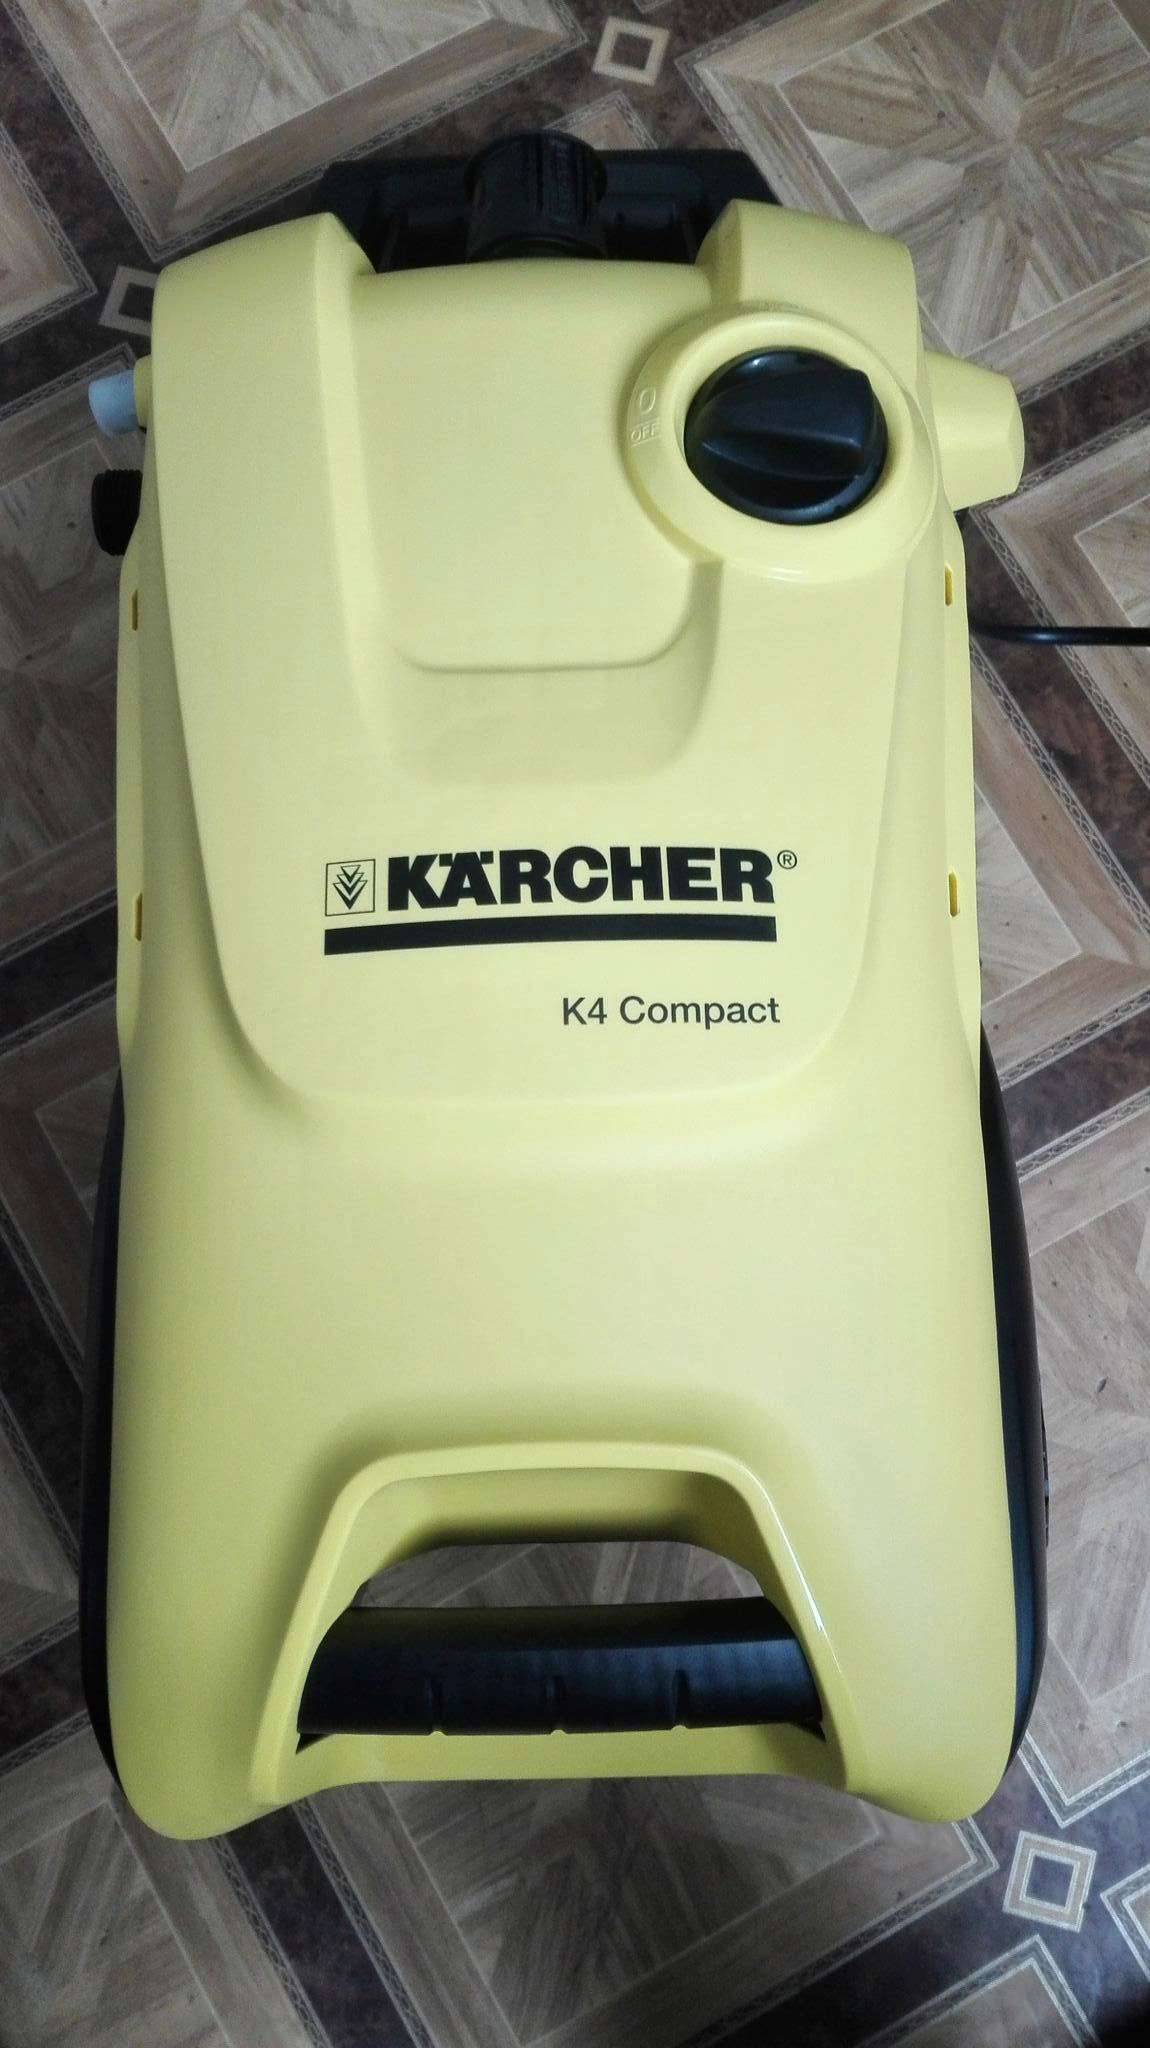 К 4 компакт. Karcher k4 Compact 1.637-500.0. Karcher k4 Compact 1.637-310.0. Karcher k 4 Compact. Мойка Karcher k 4 Compact 1.637-310.